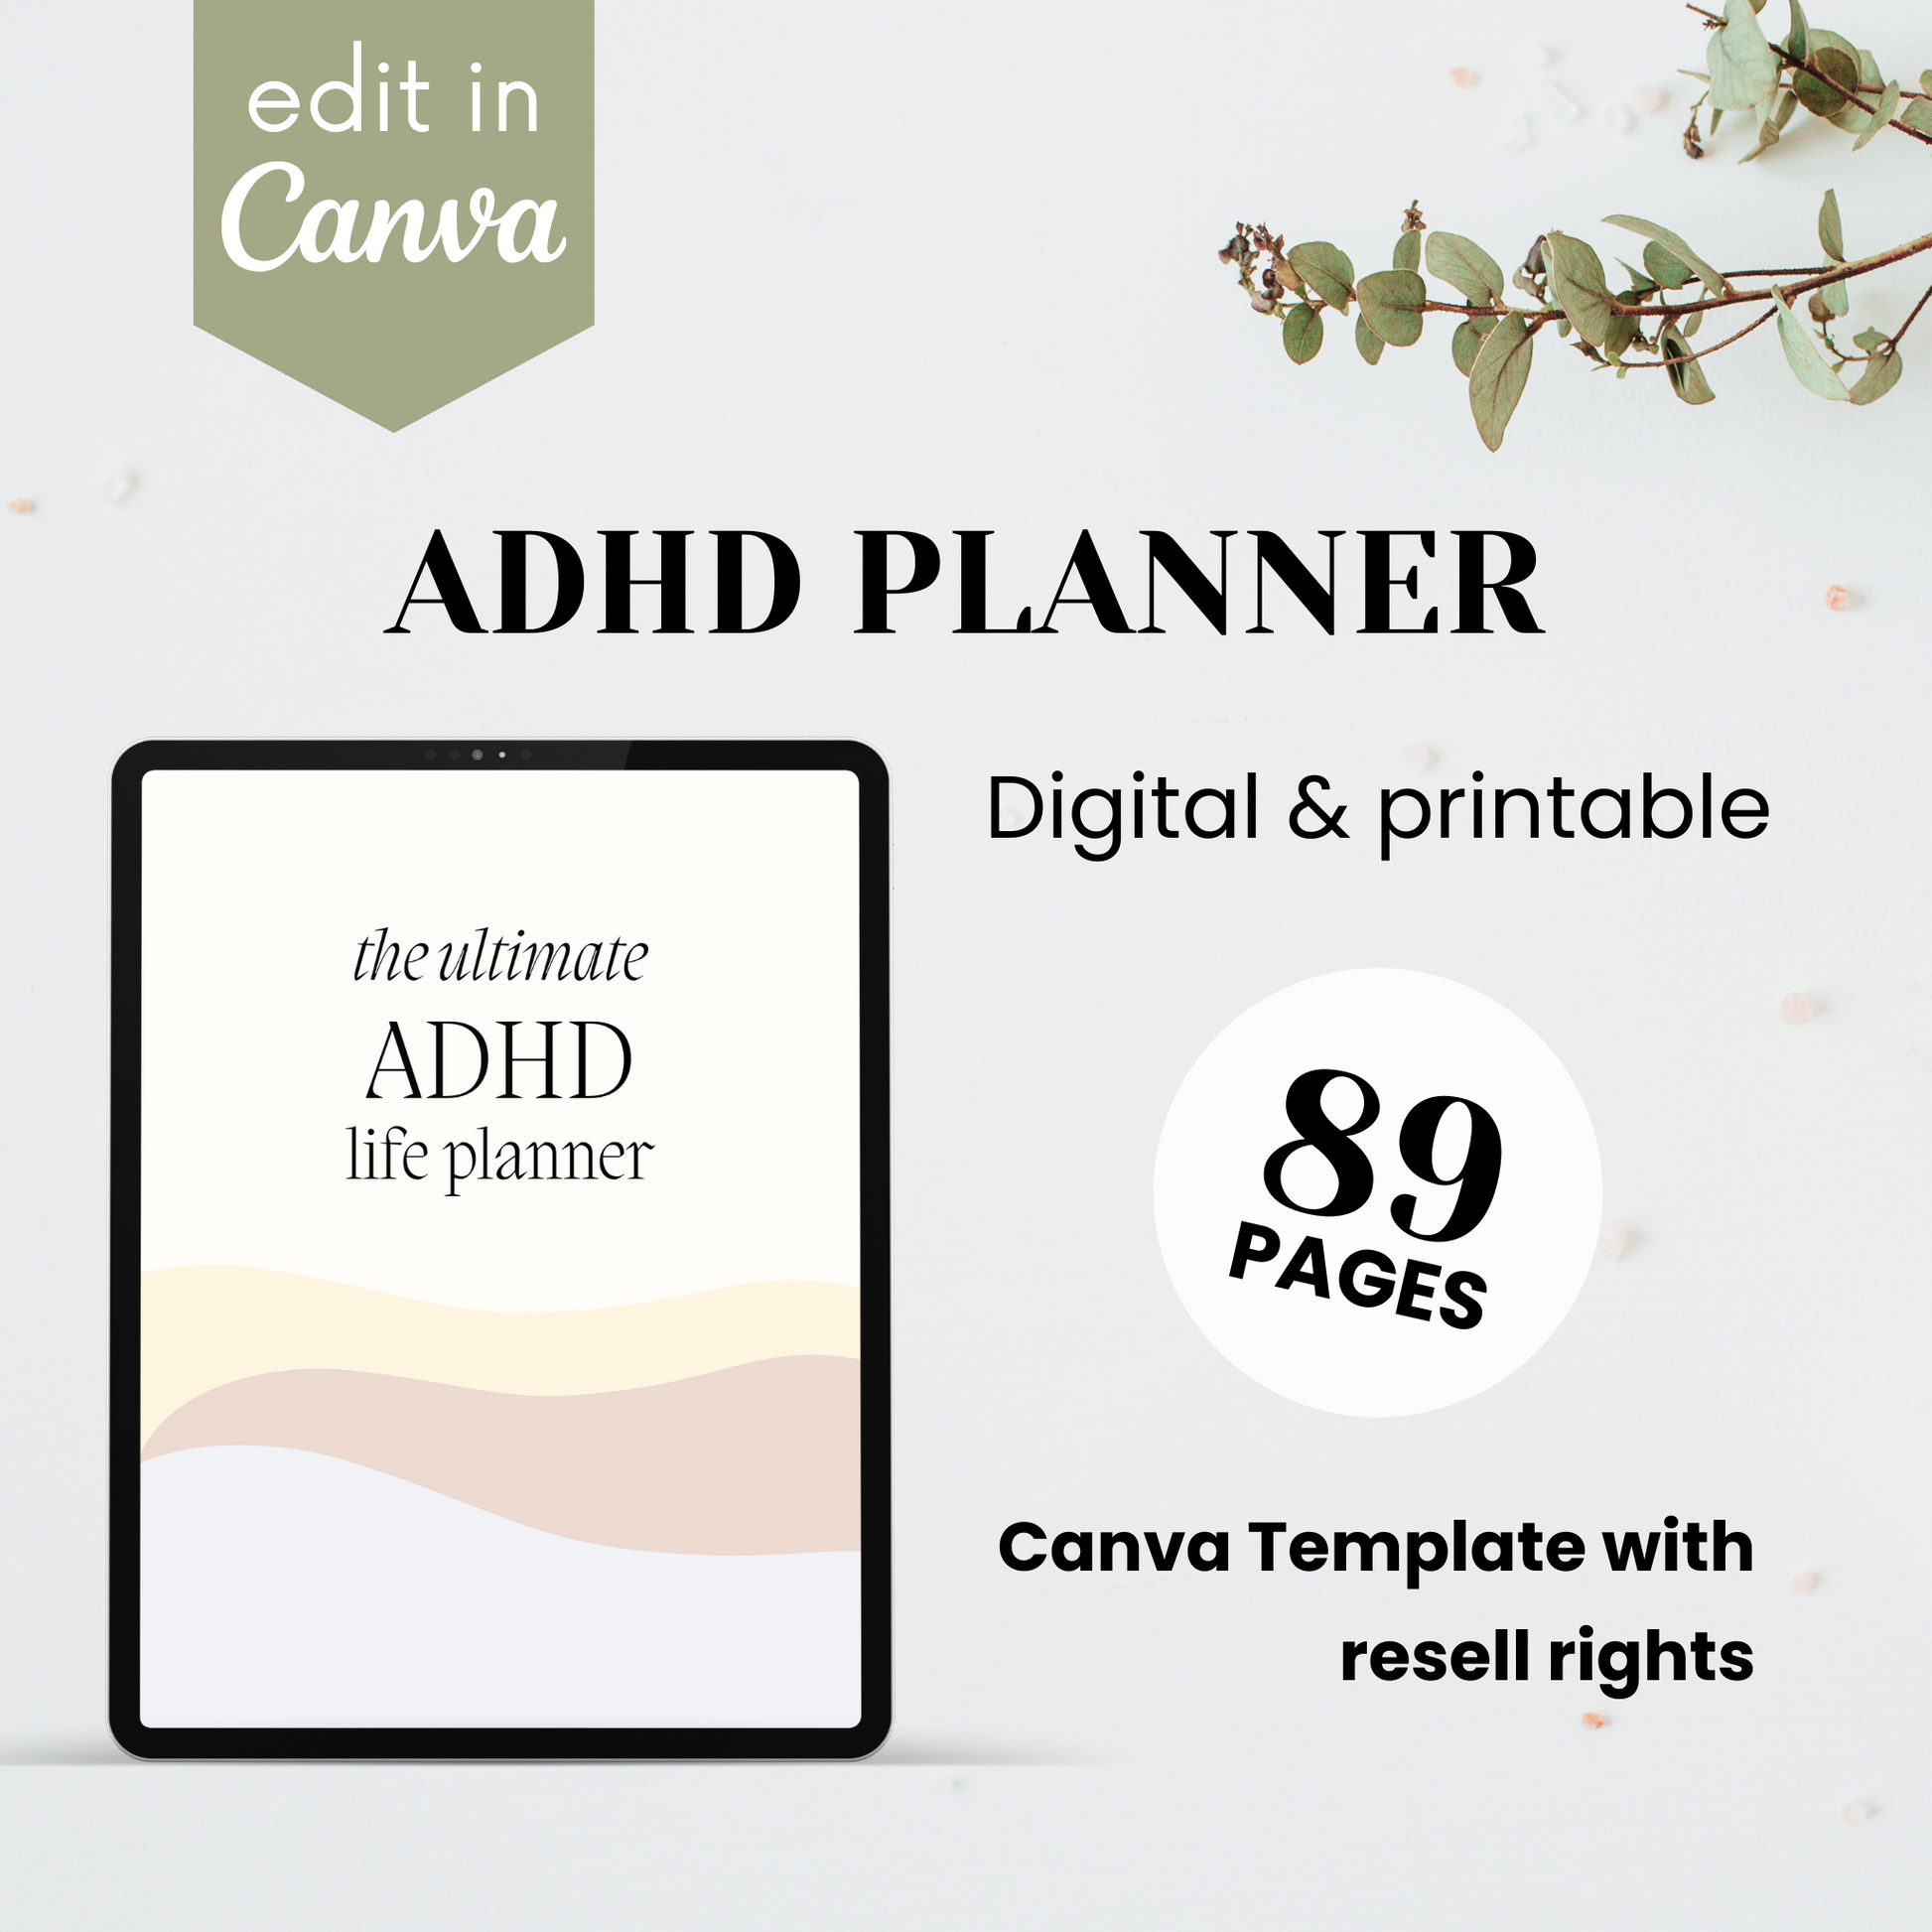 Printable ADHD Life Planner